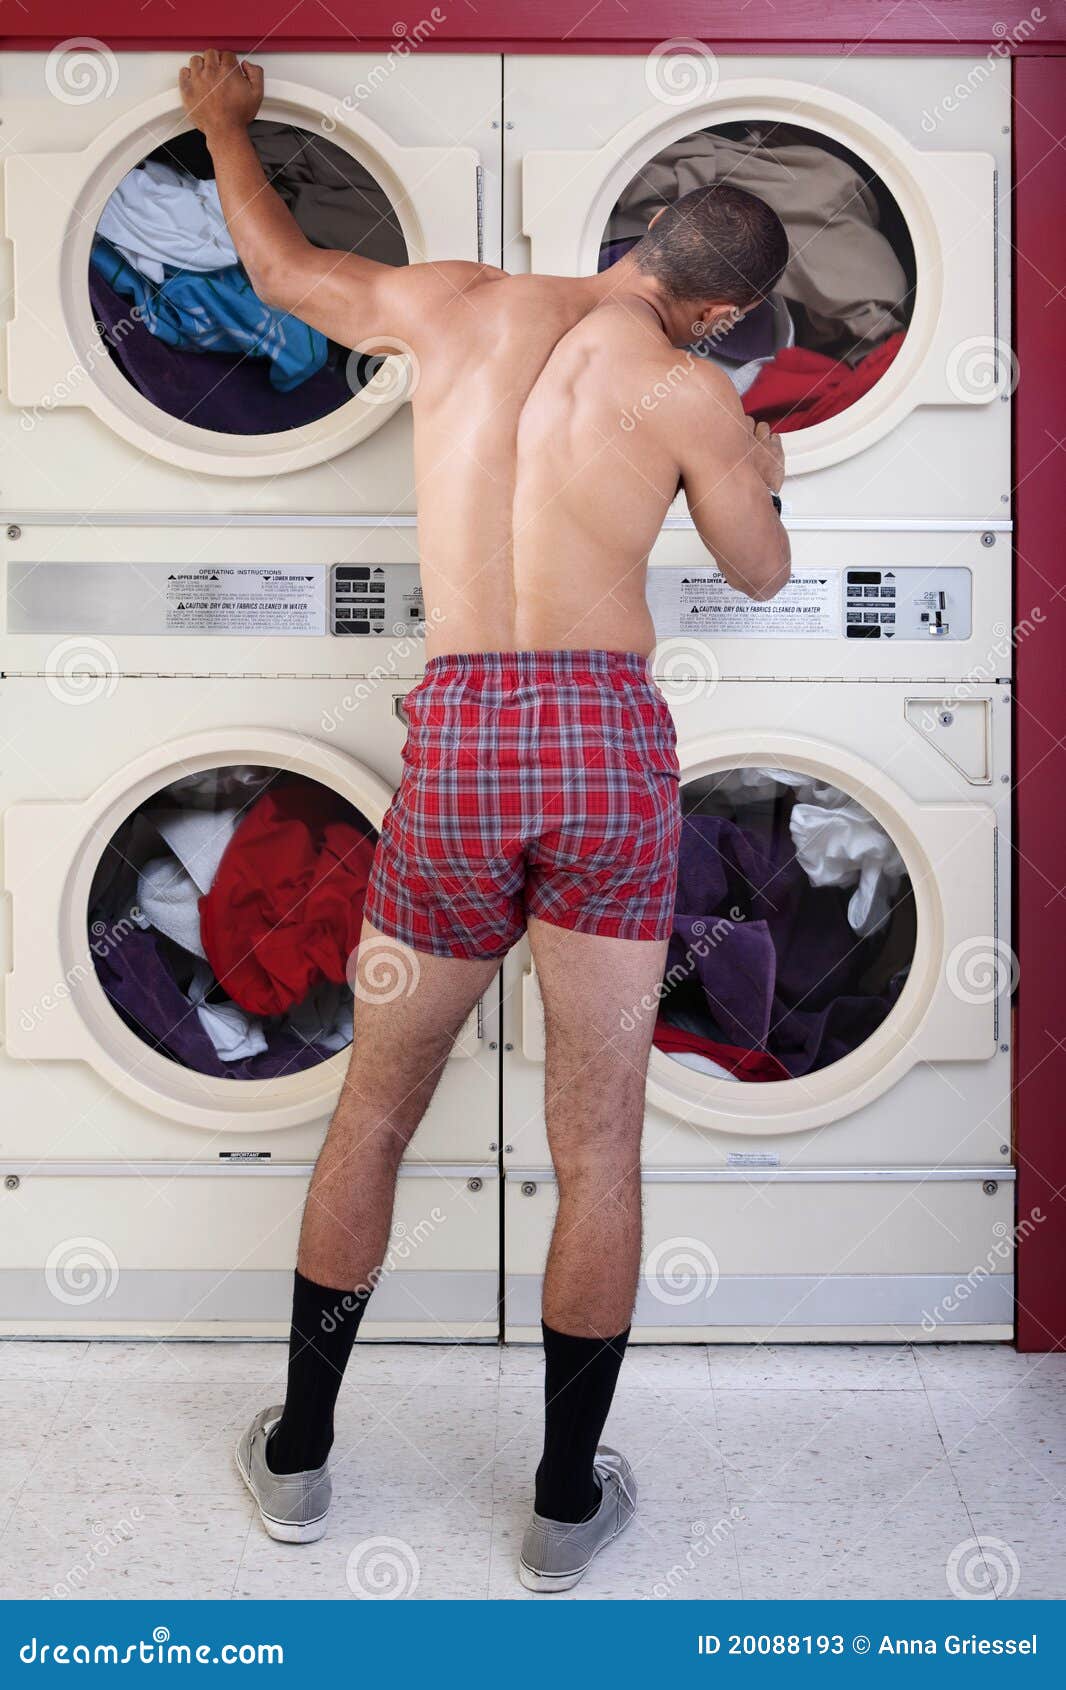 158 Male Underwear Laundry Stock Photos - Free & Royalty-Free